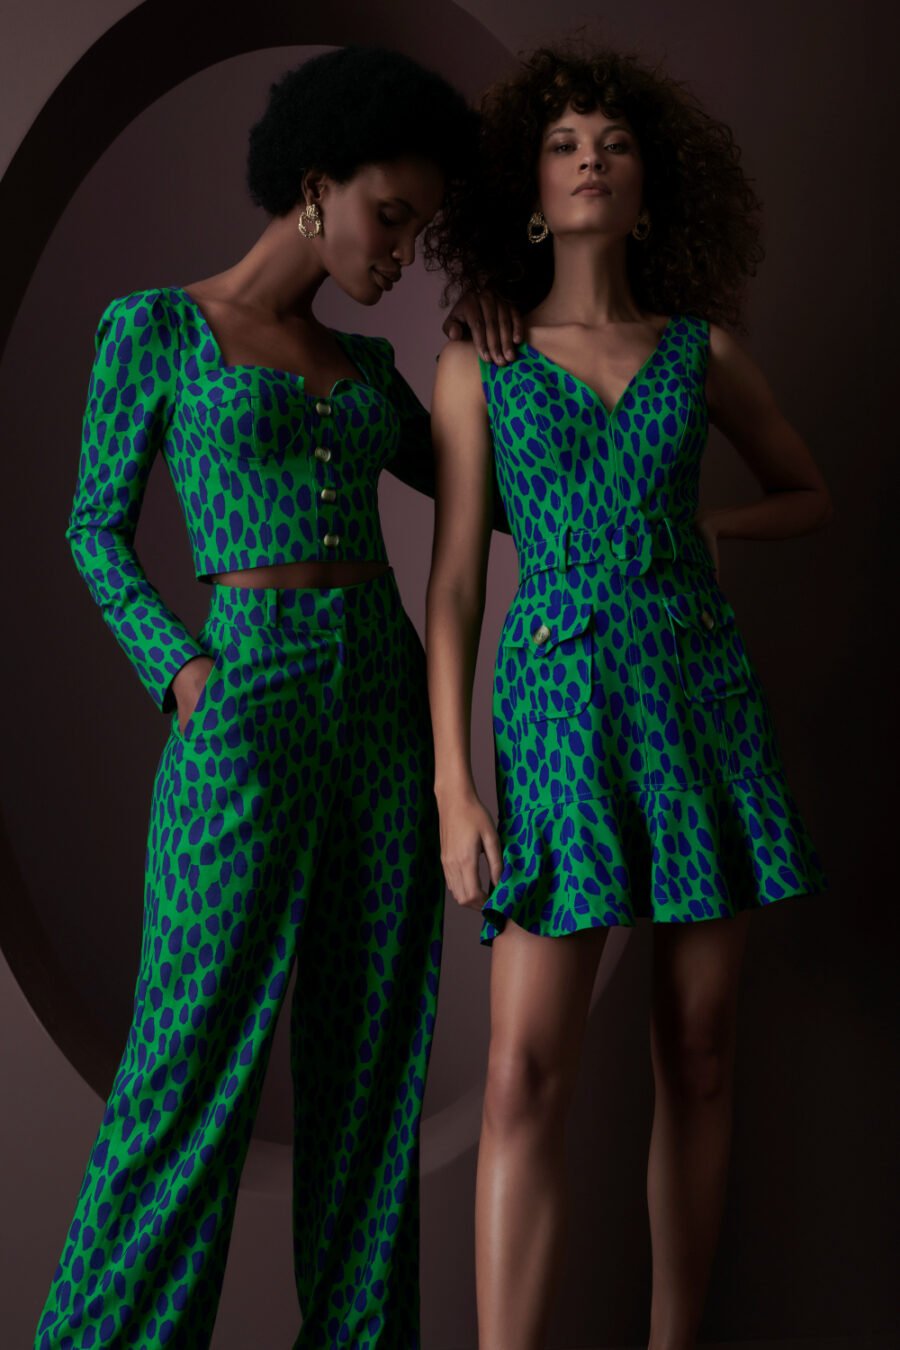 "Leopard Spotted" Dress by Fedra